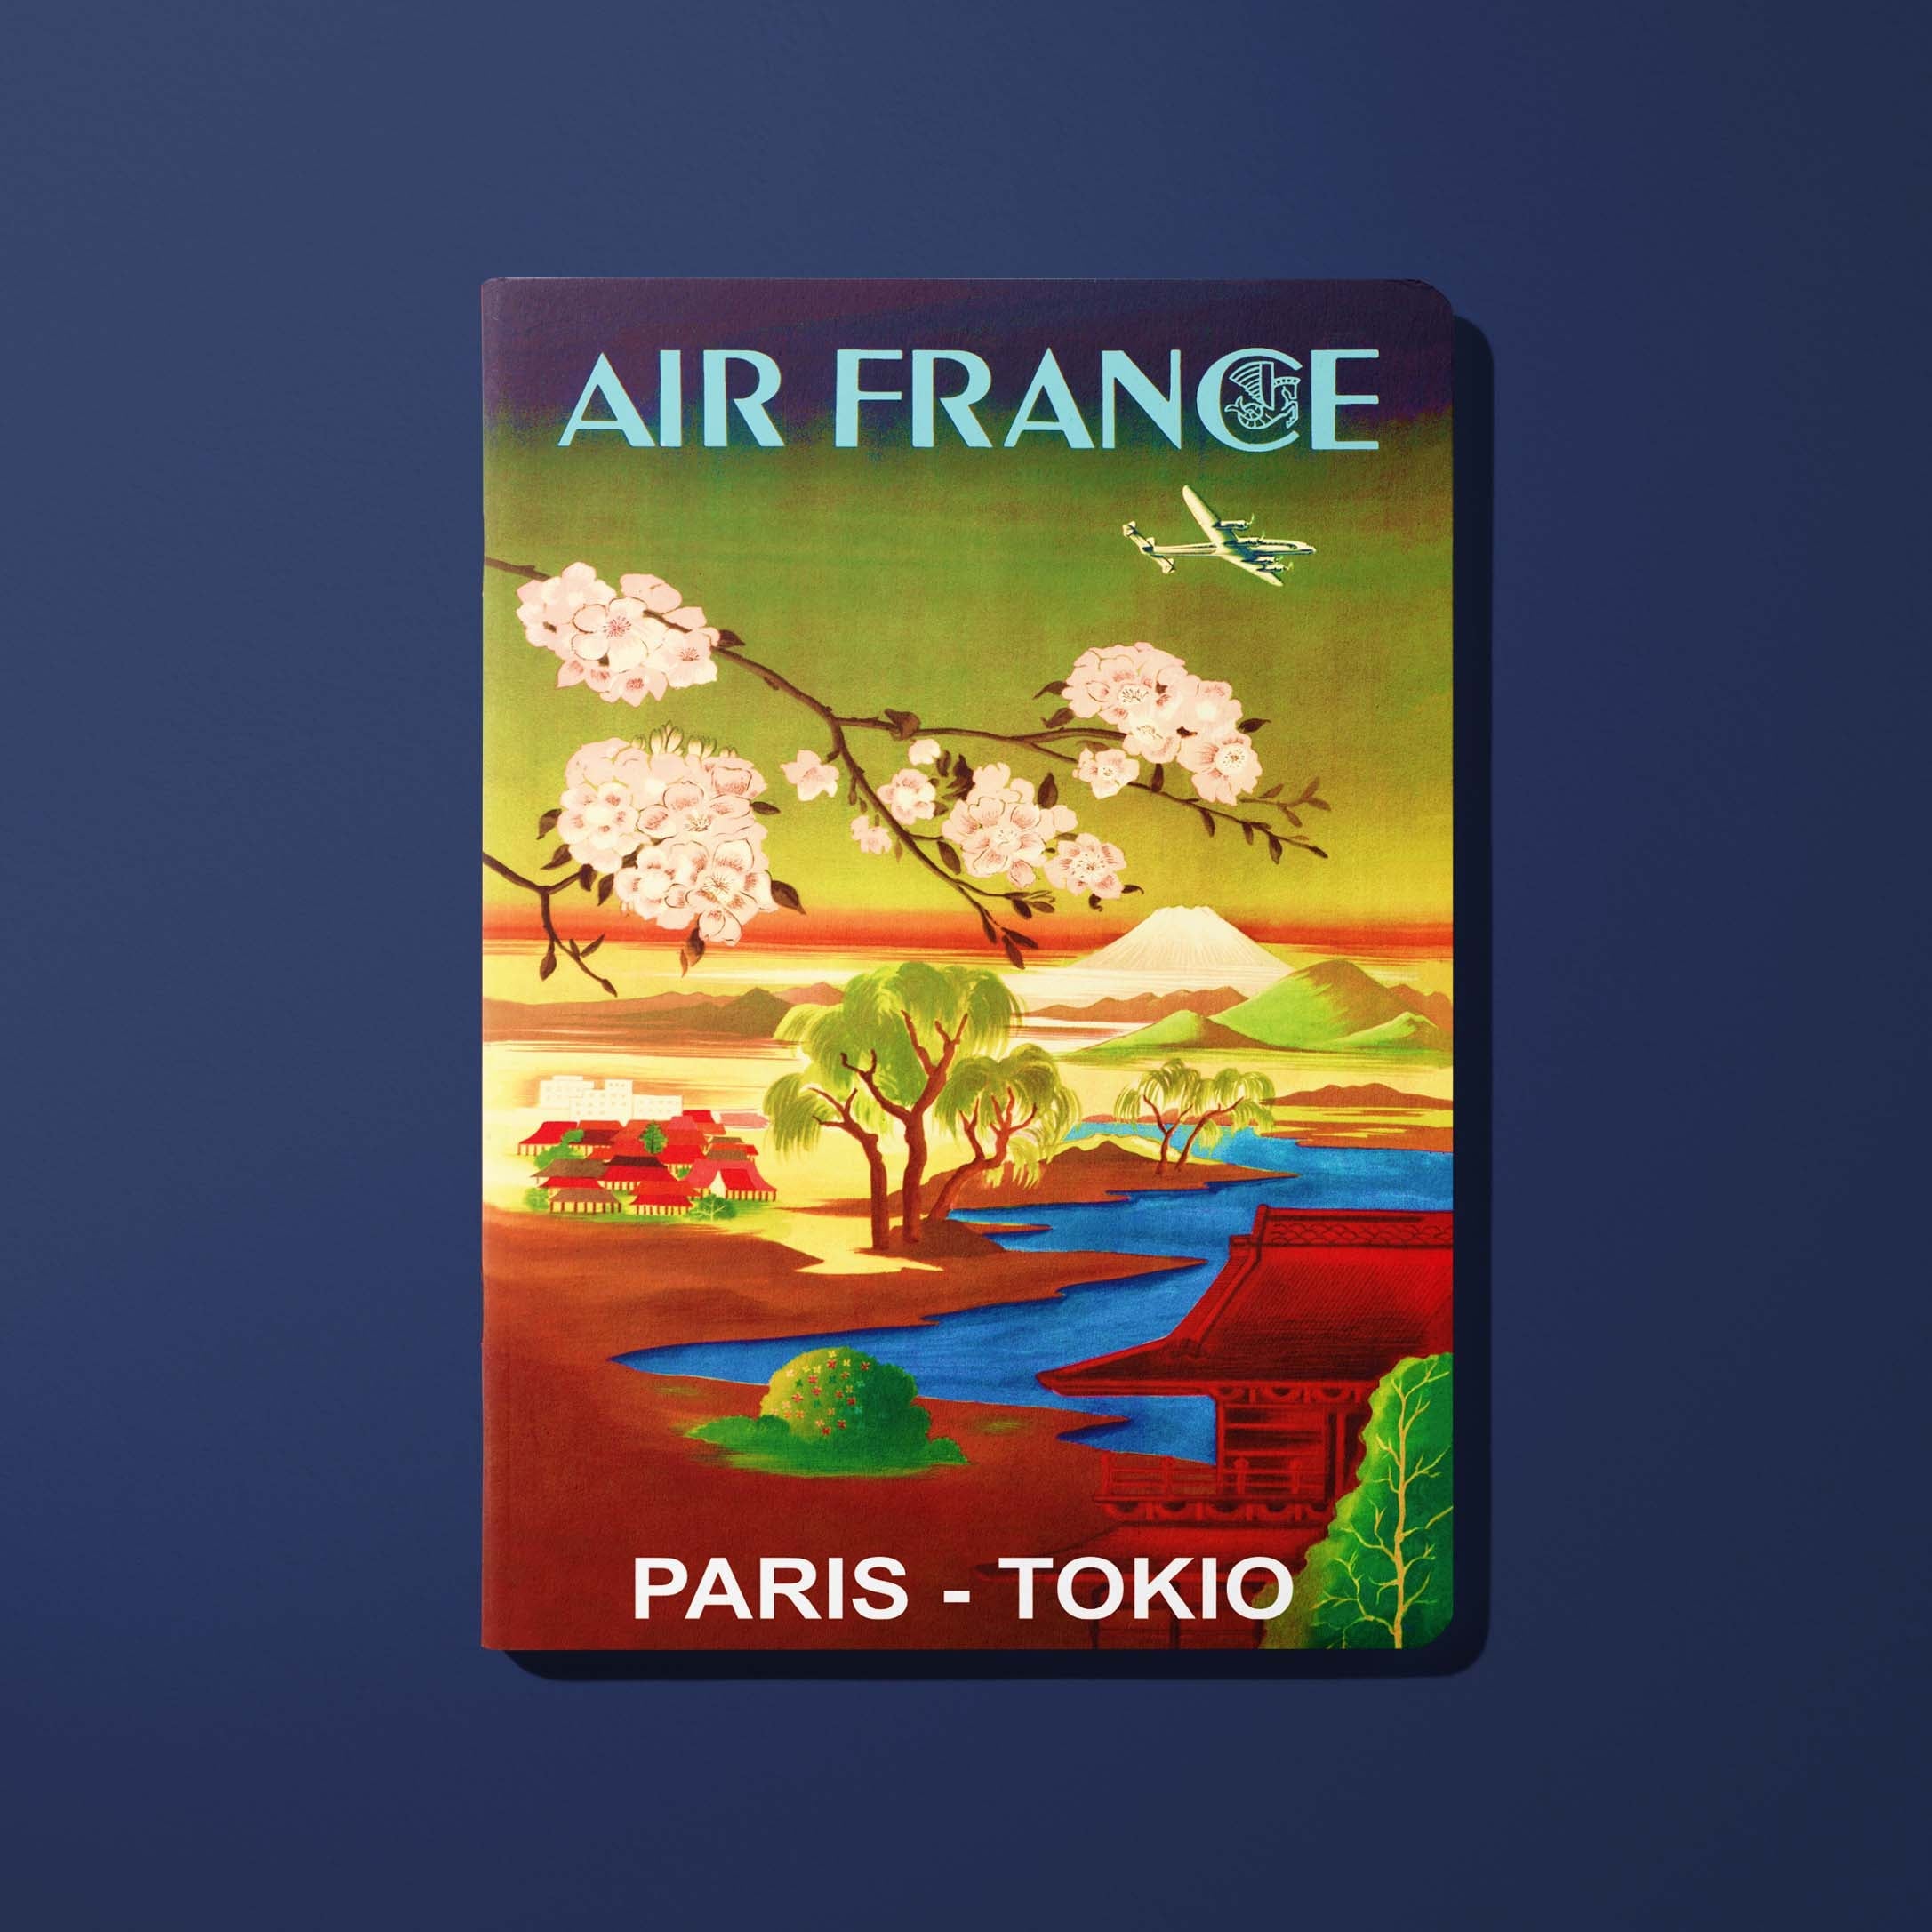 Air France Legend Paris notebook - Tokio, cherry blossoms